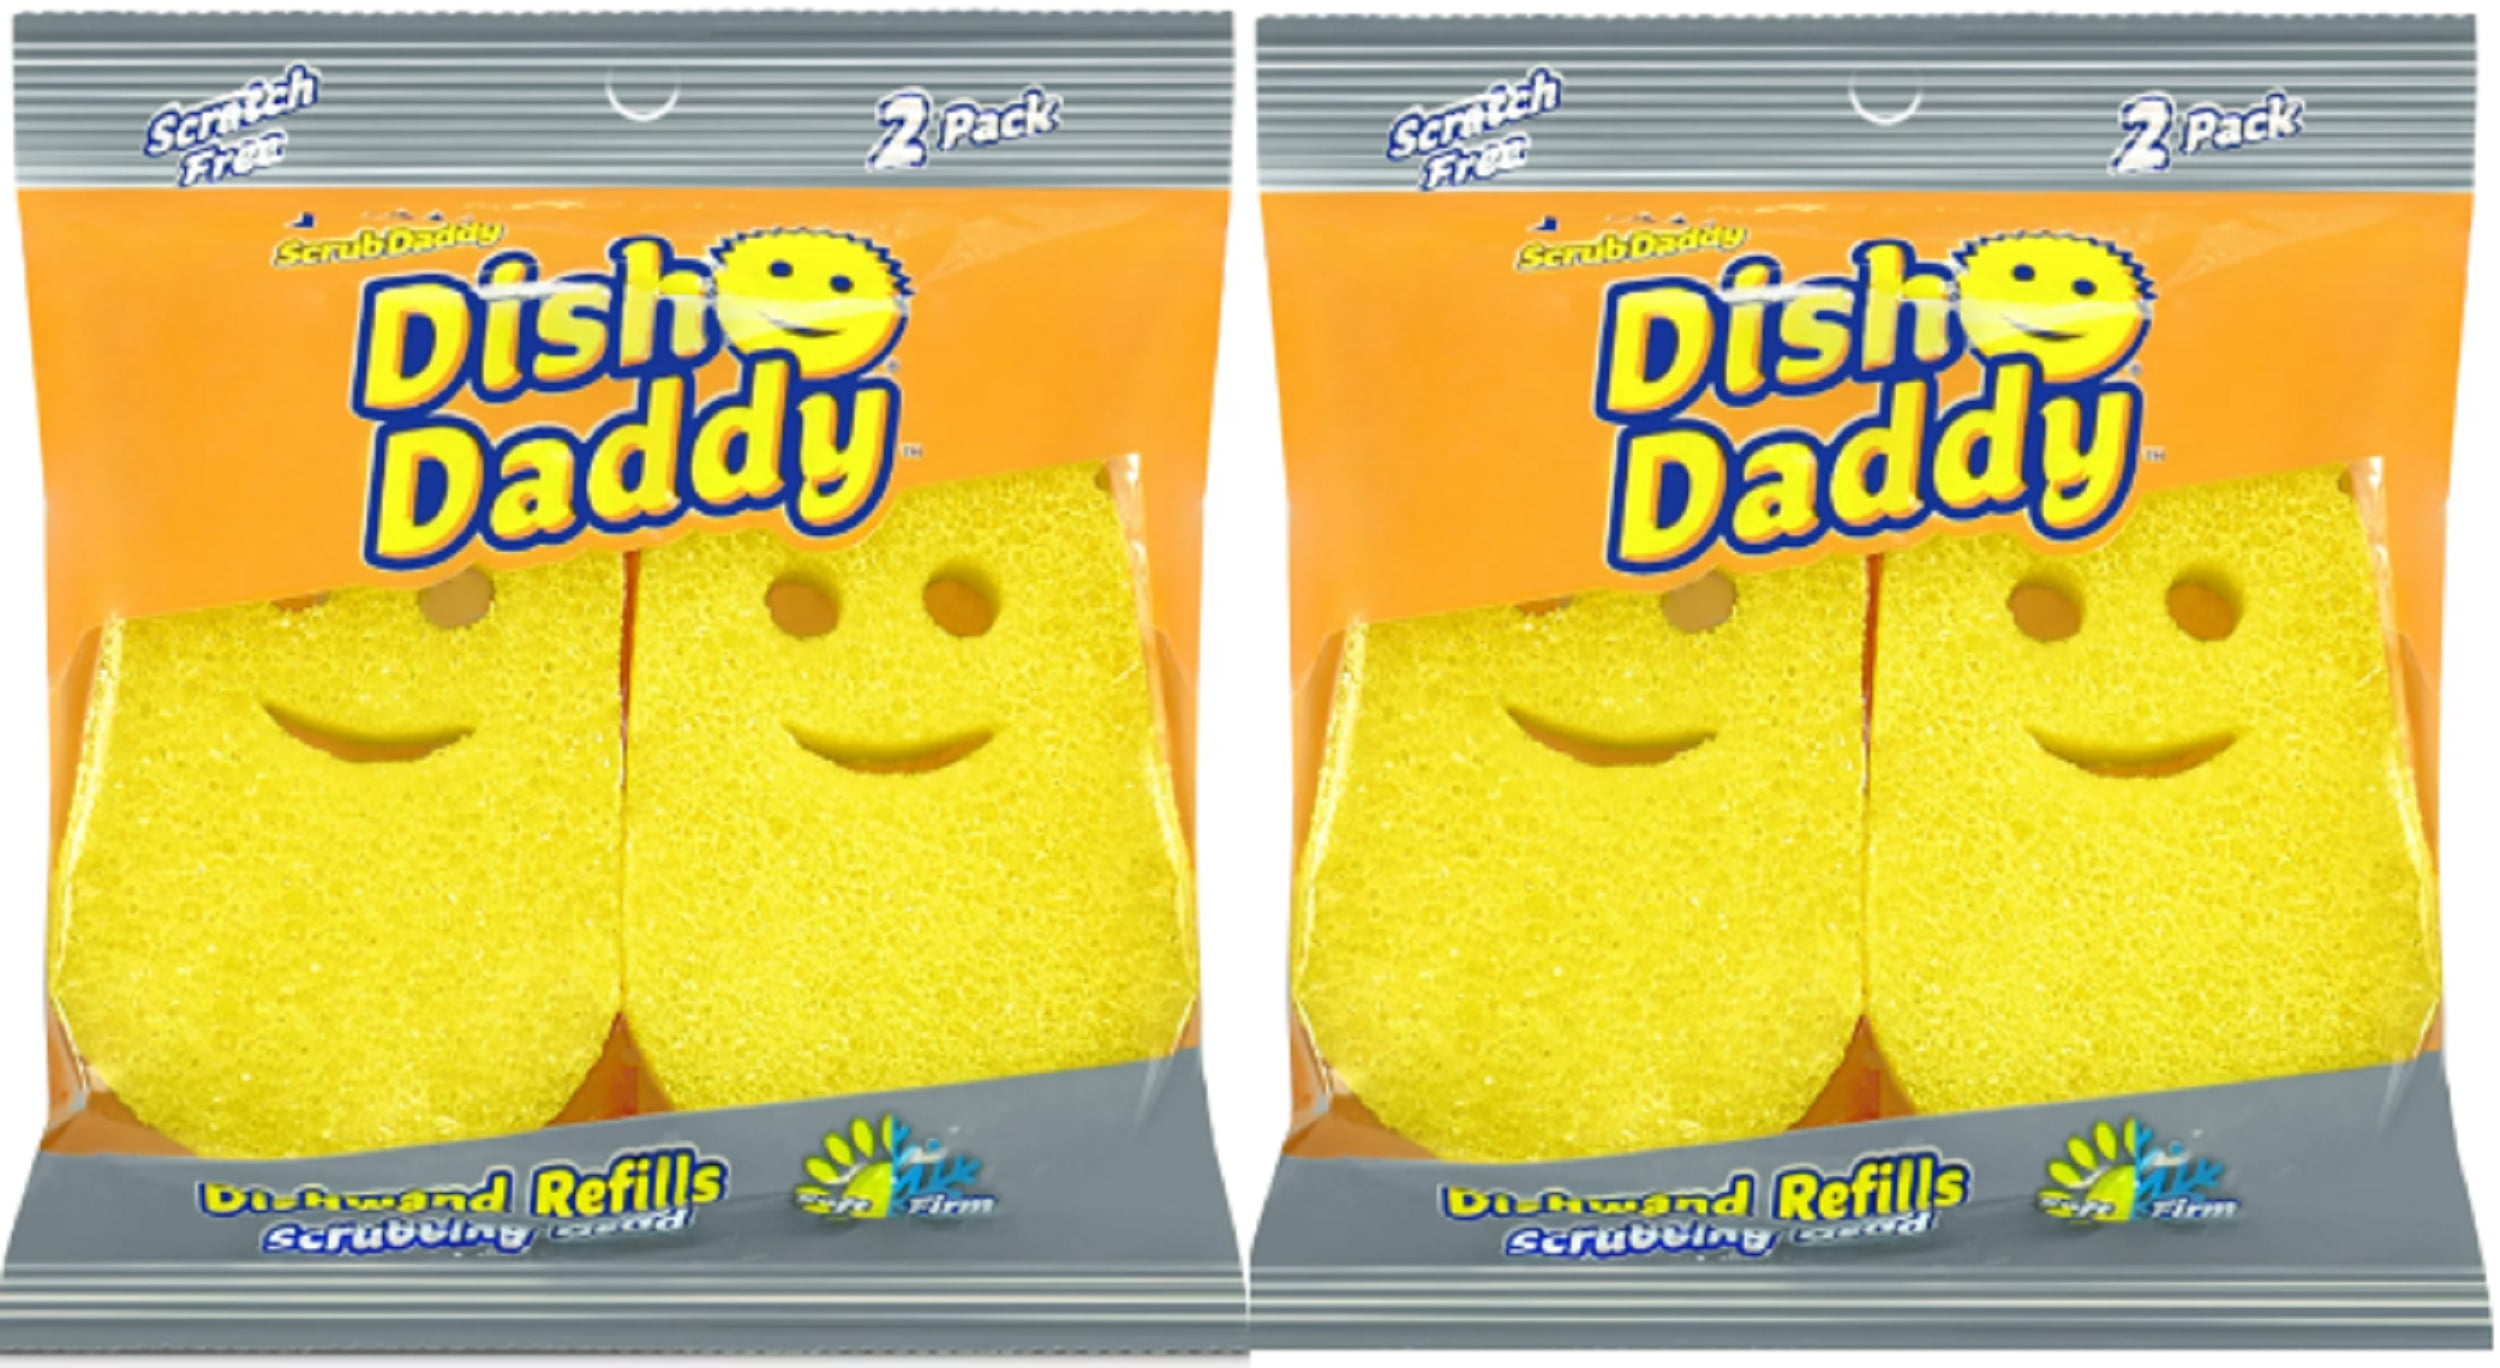 Scrub Daddy Dish Daddy Refills 2 Pack - Tesco Groceries